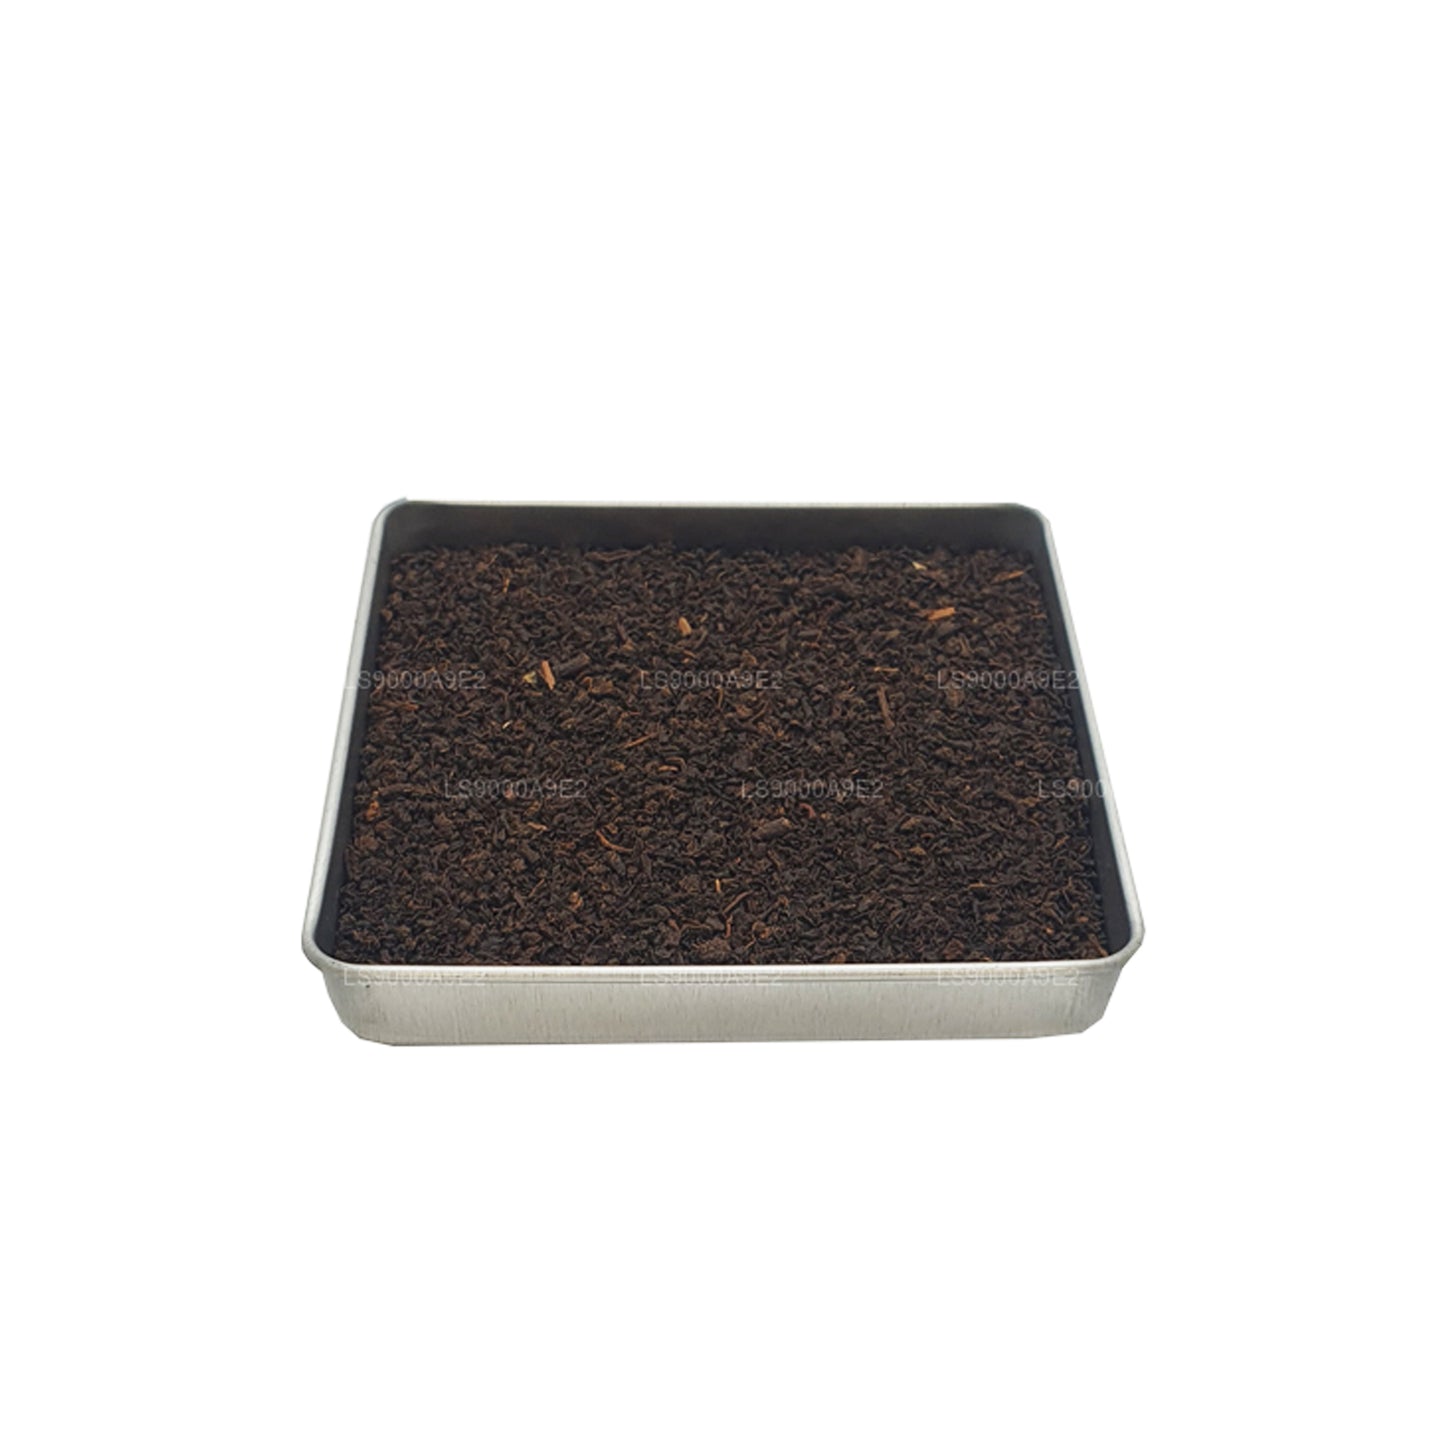 Lakpura Single Estate (Kenilworth) PEKOE Grade Ceylon Black Tea (100g)